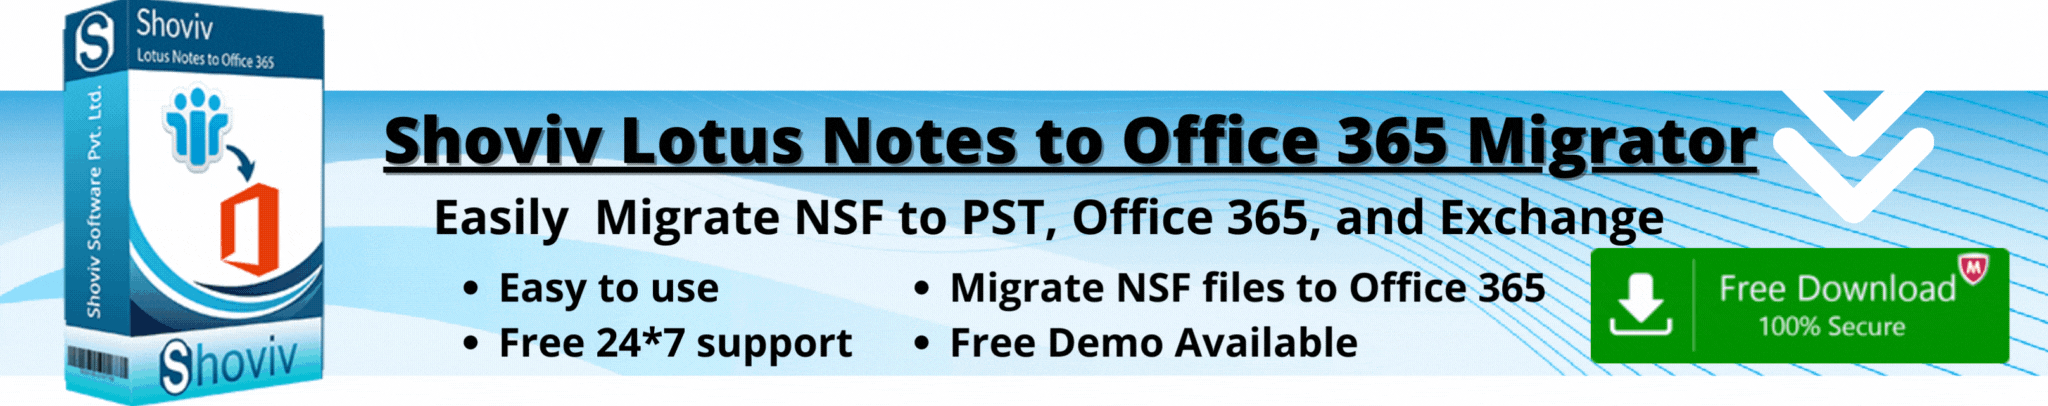 Shoviv Lotus Notes to Office 365 migrator